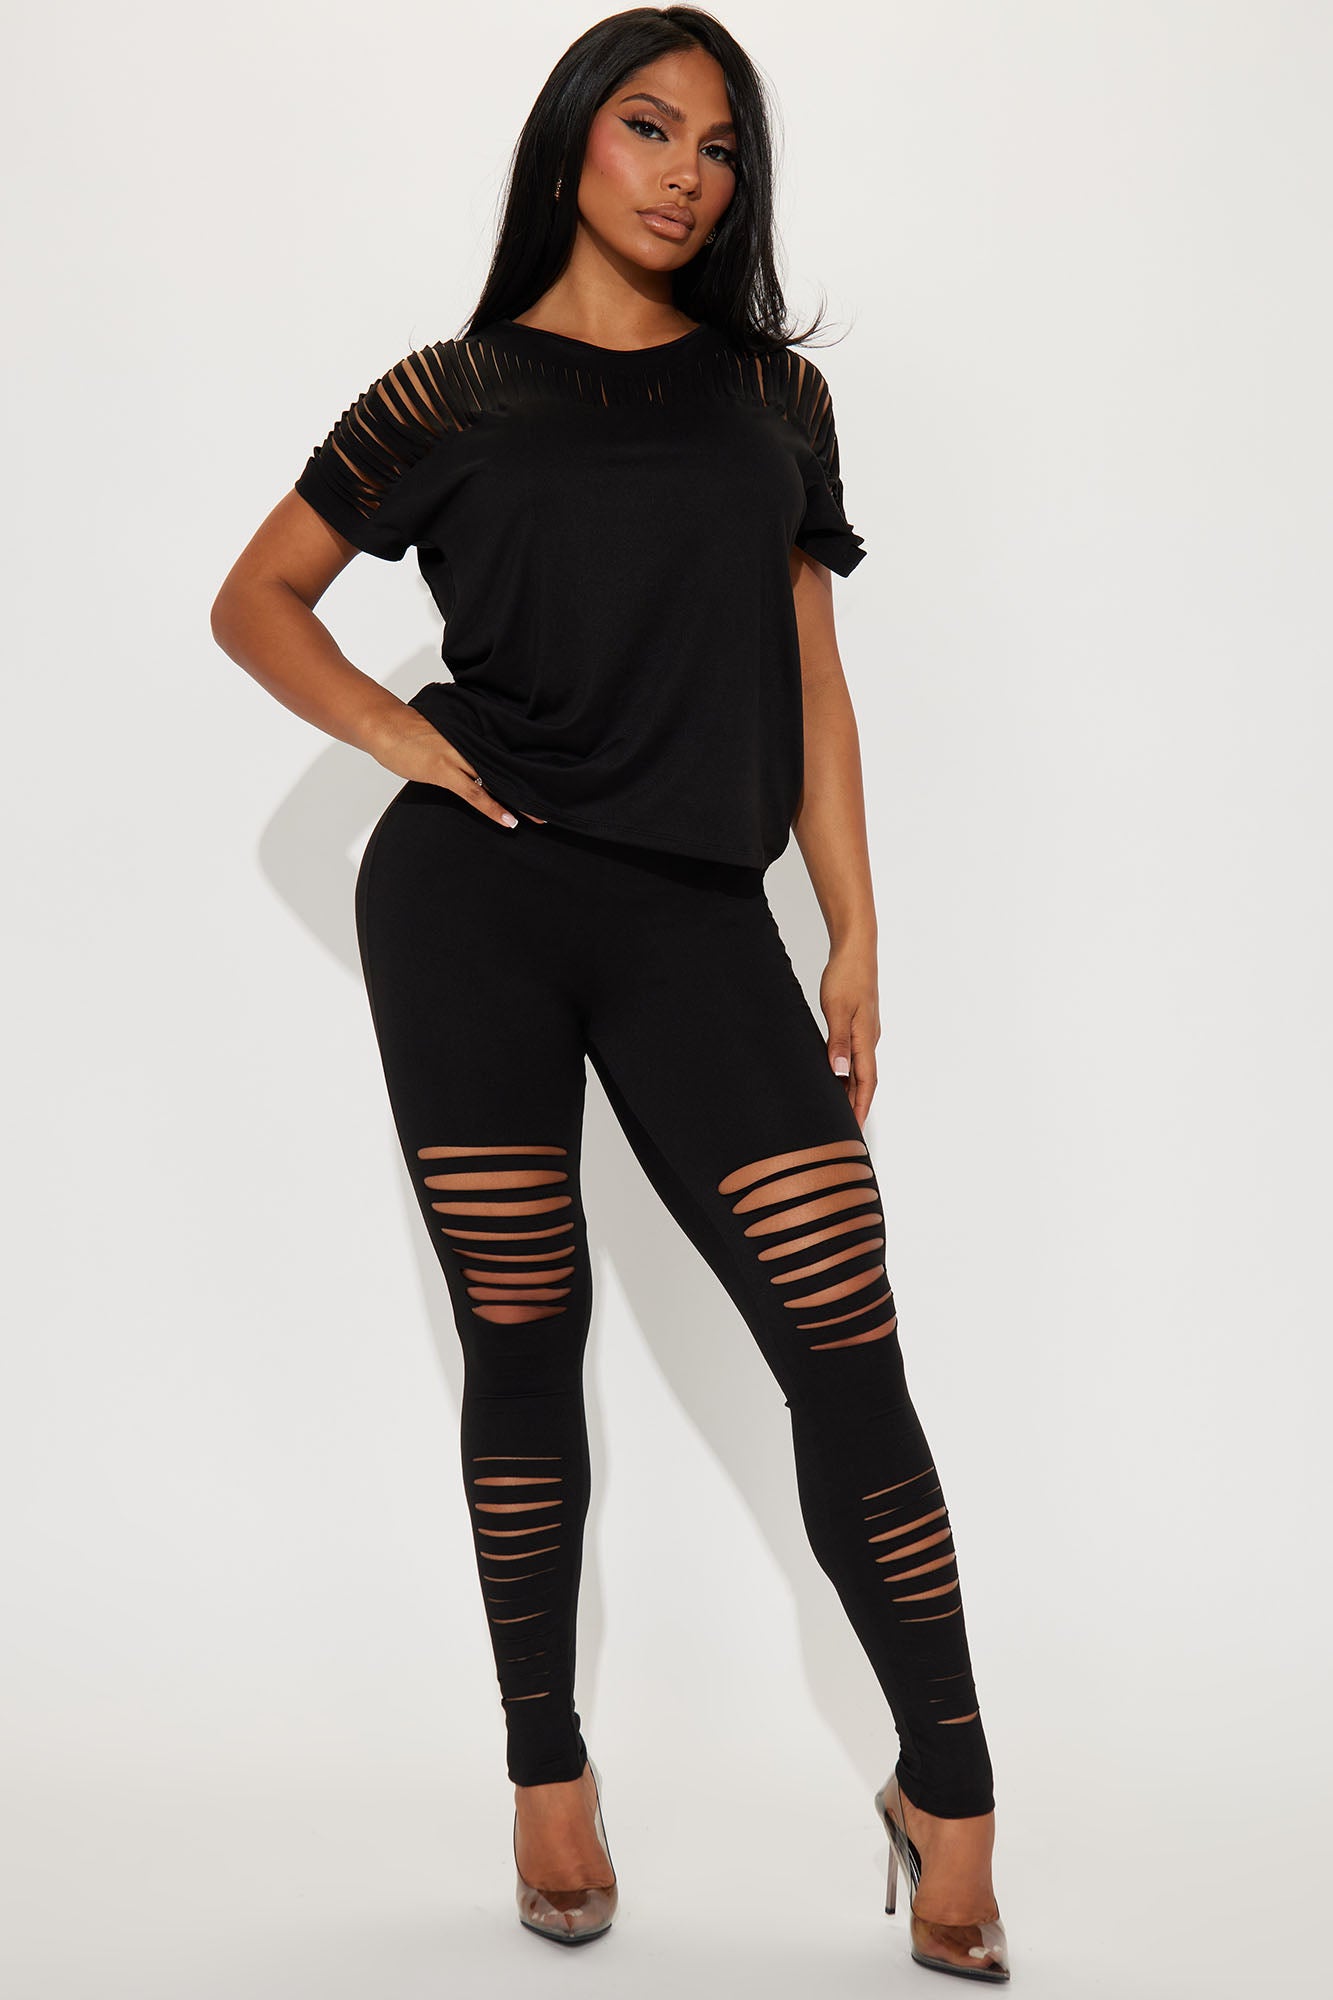 Jenna Distressed Legging Set - Black, Fashion Nova, Matching Sets